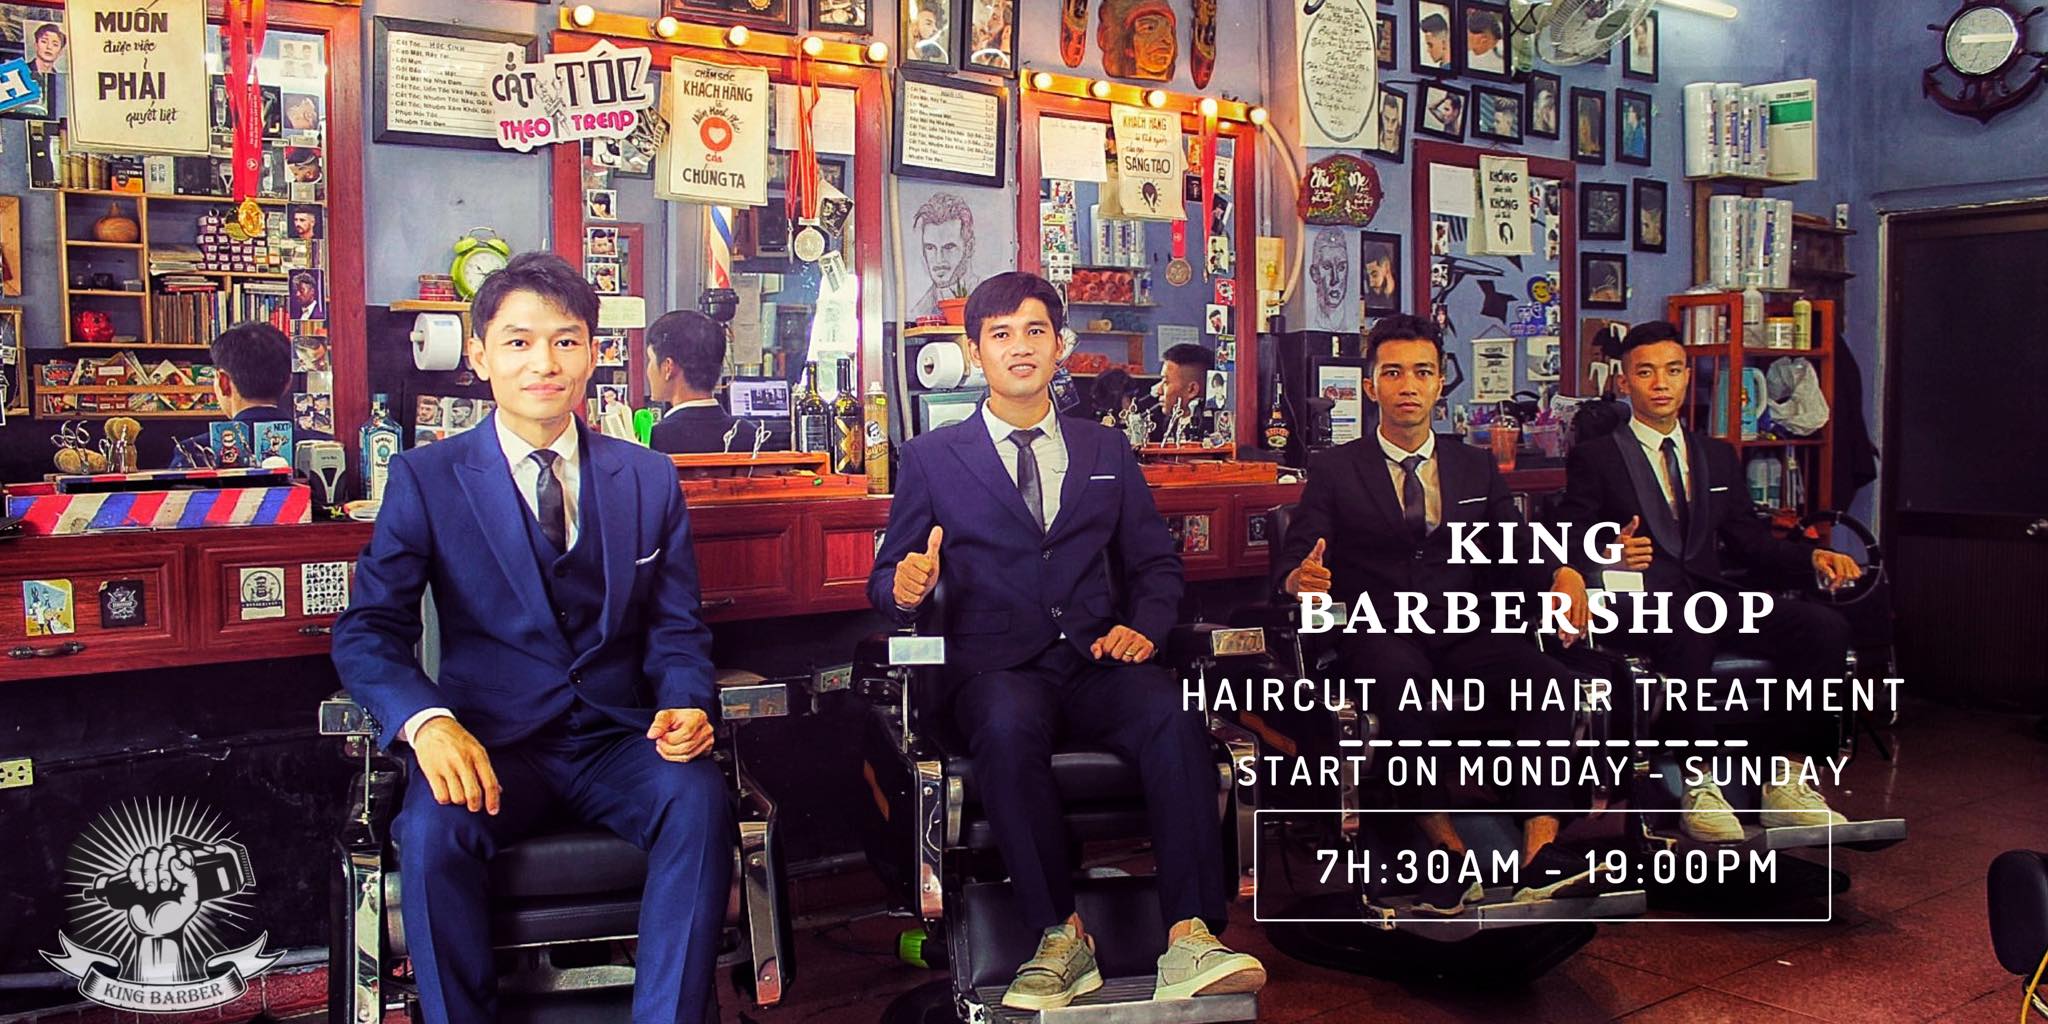 tiệm cắt tóc nam - kingbarber